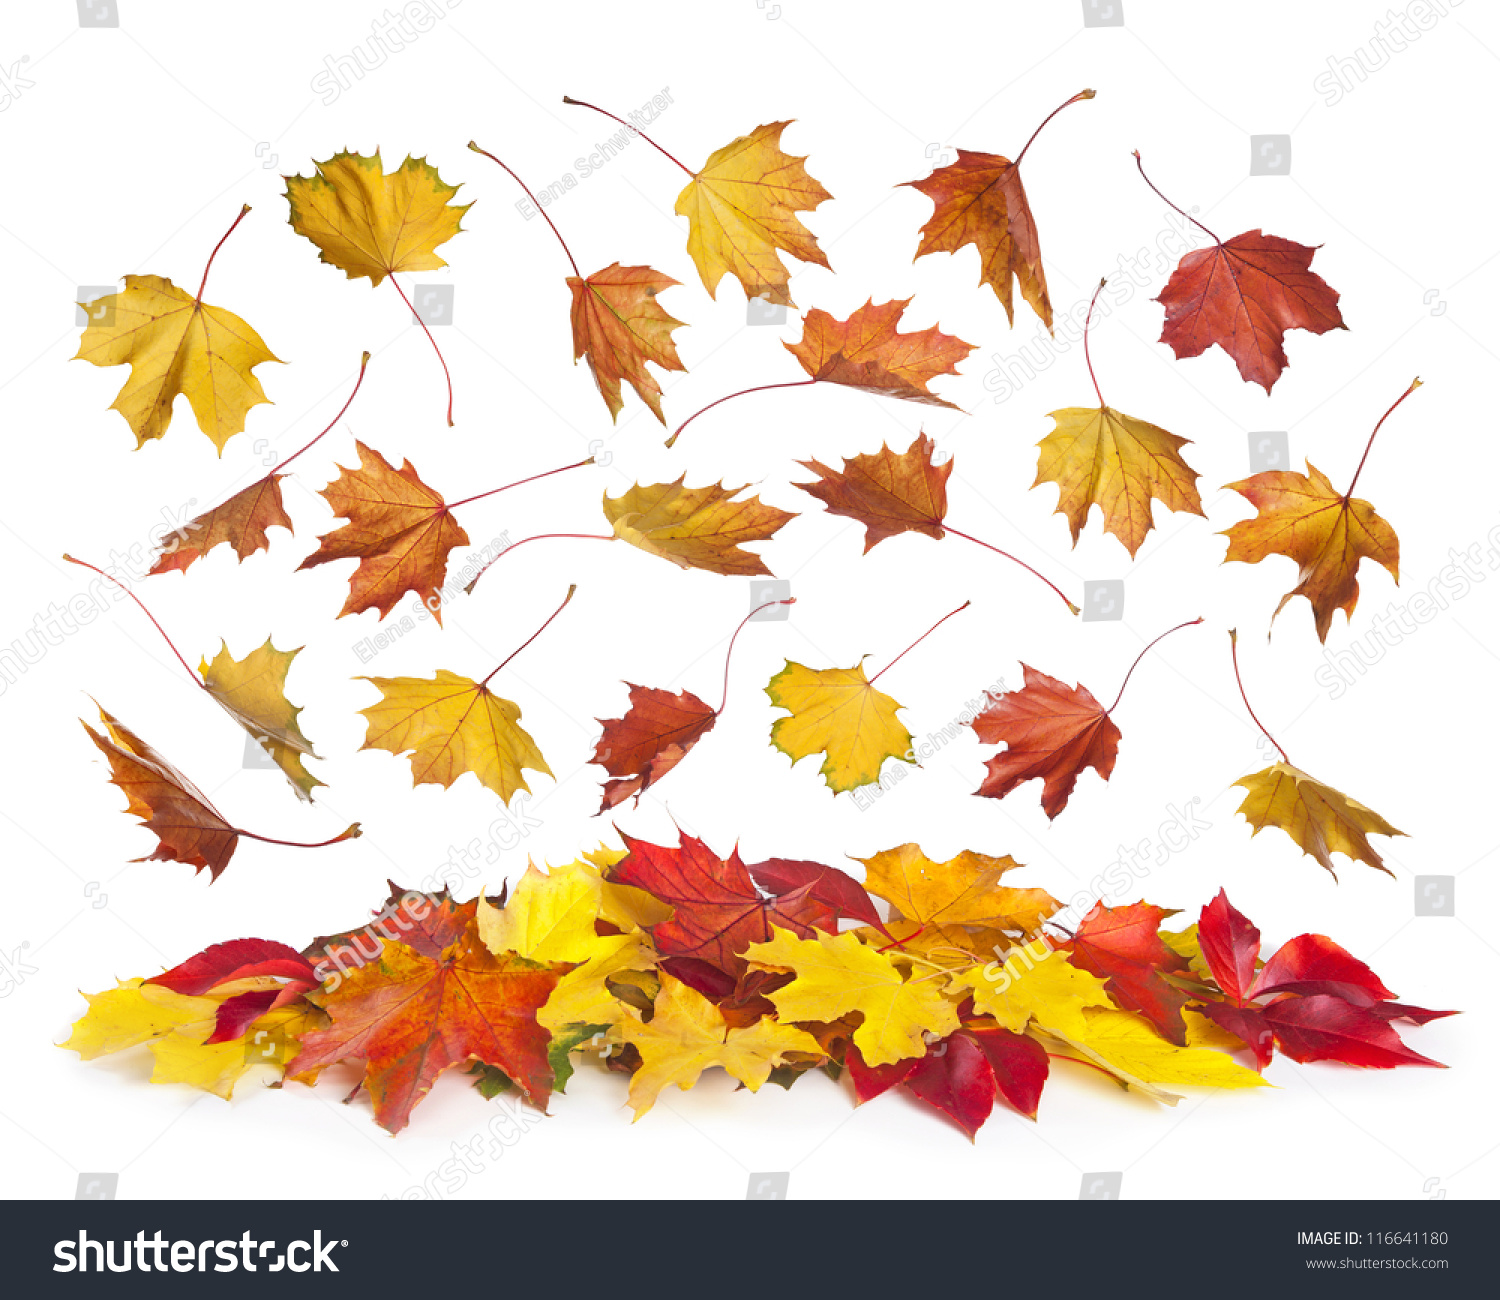 PowerPoint Template: autumn falling leaves isolated (iinnliiph)